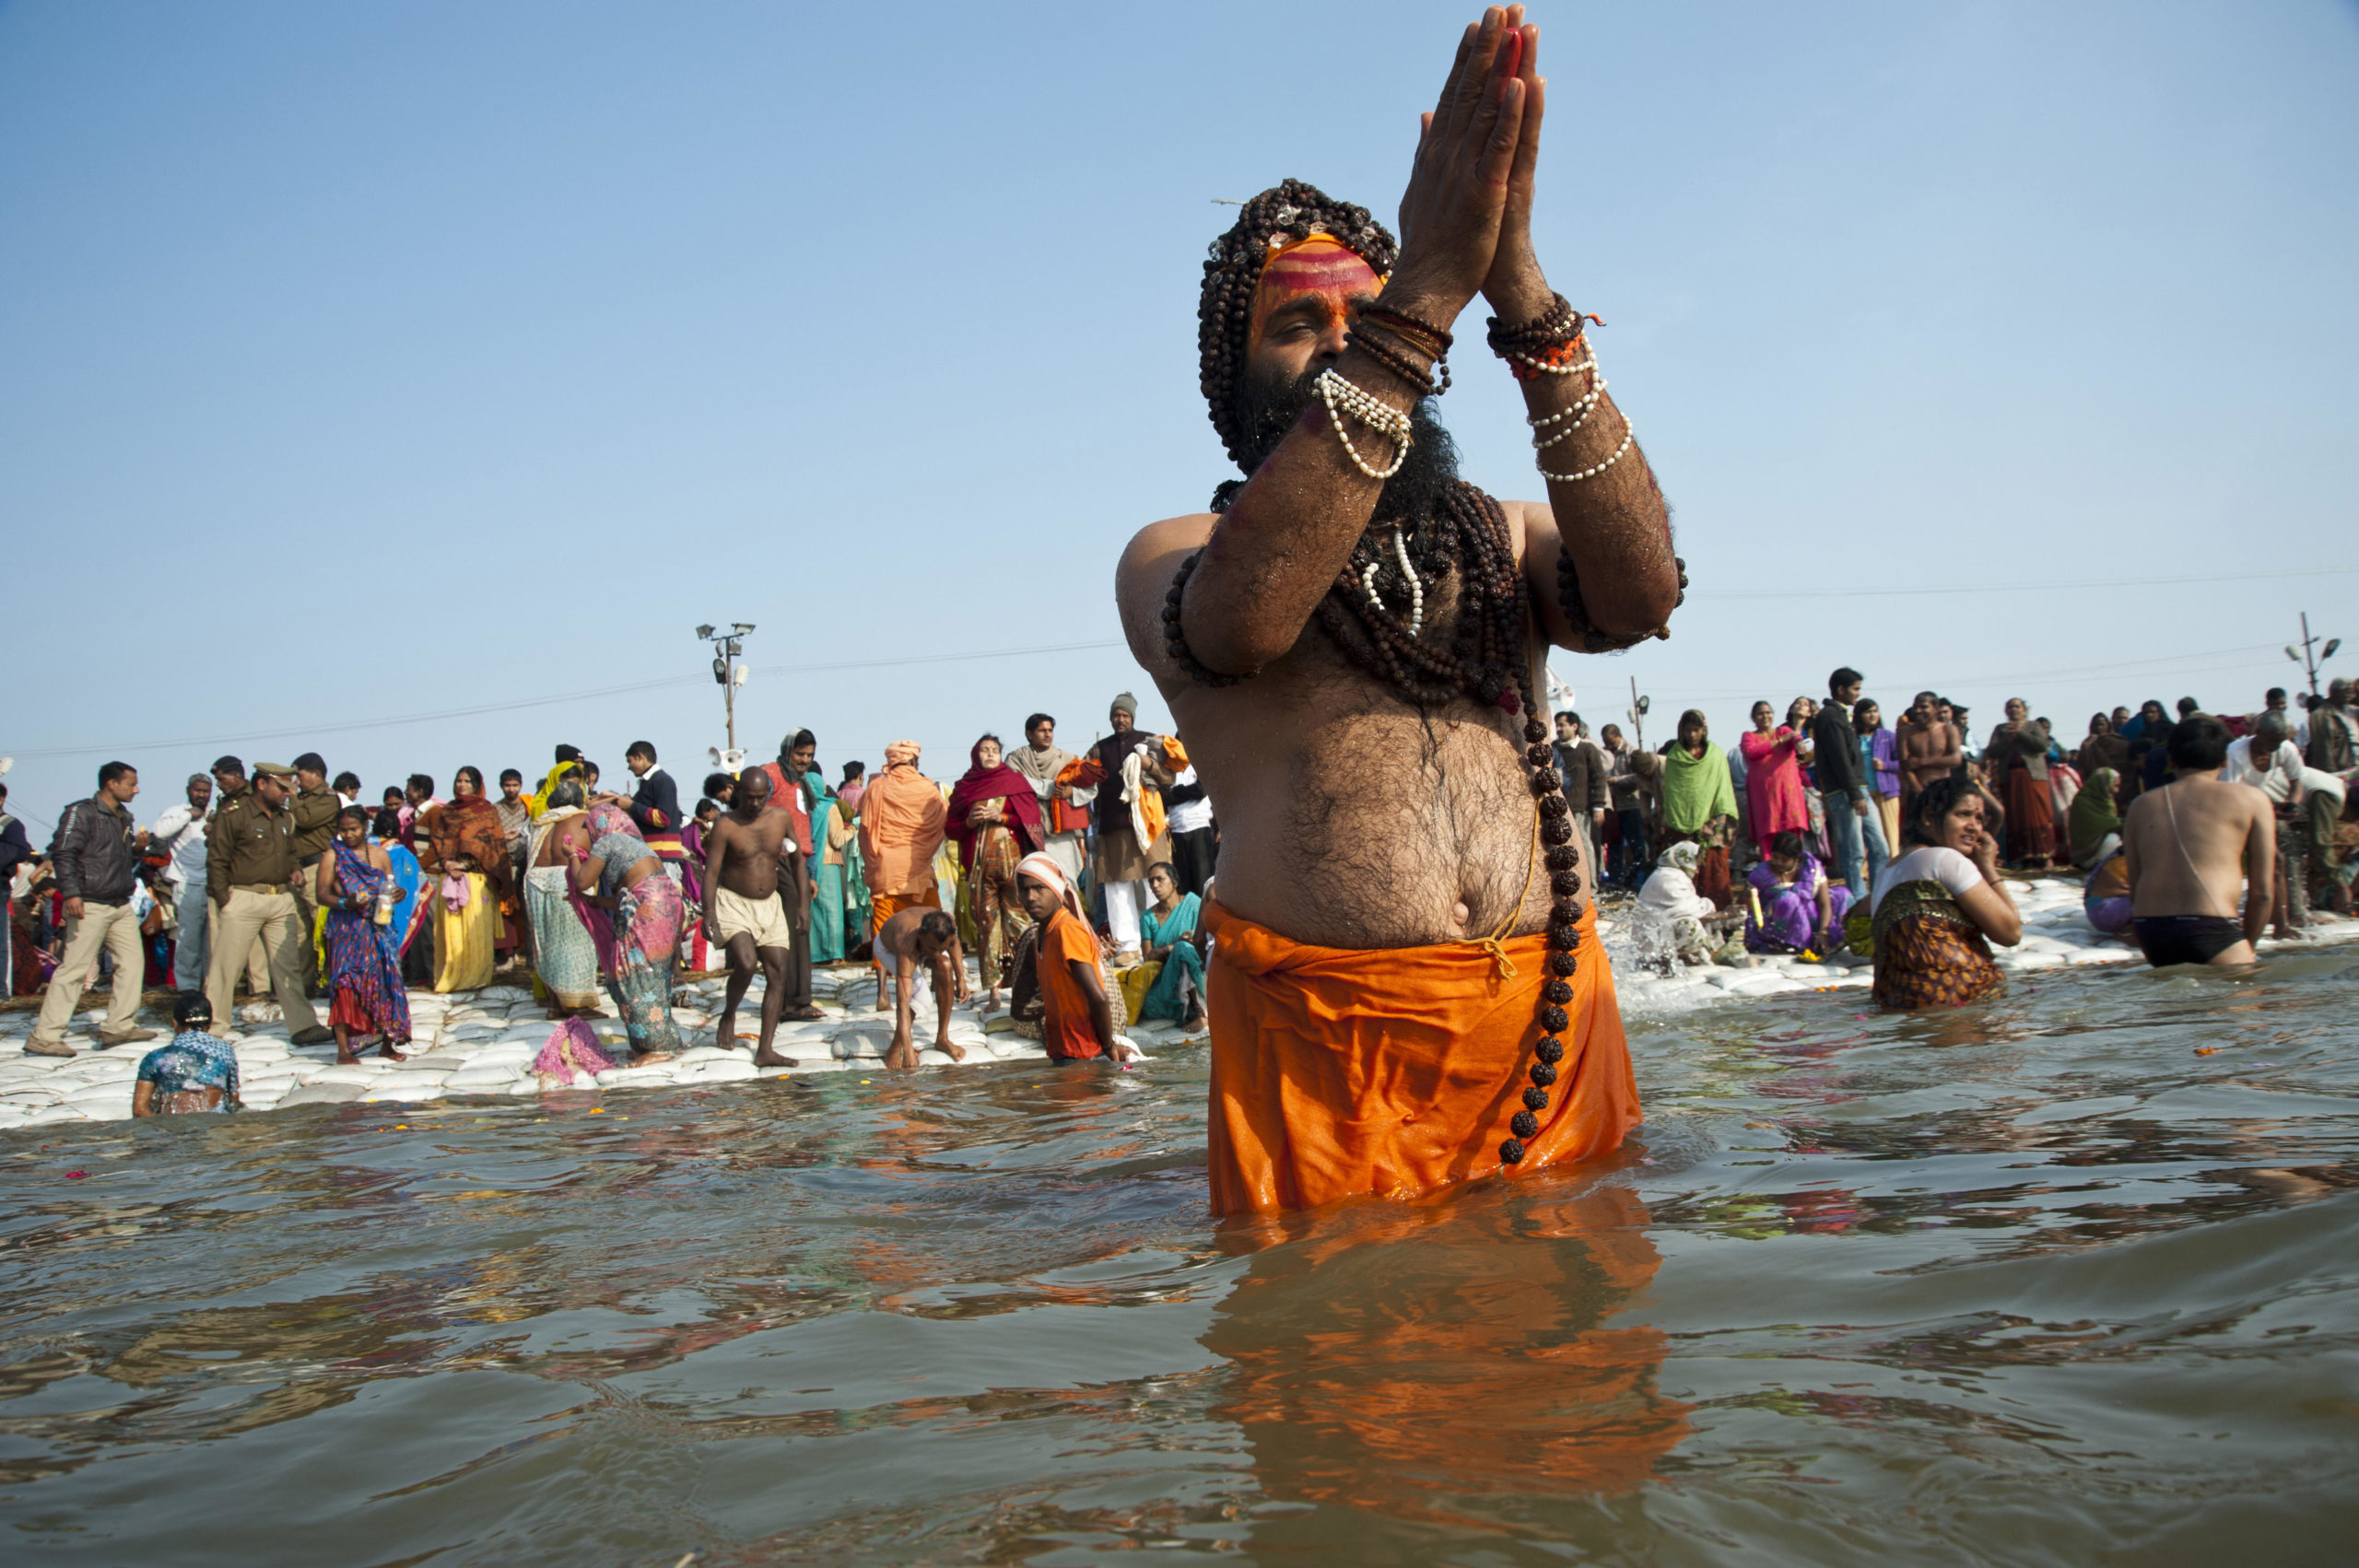 <p>A Sadhu praying to the sun in the Ganga river at the 2013 Kumbh Mela at Allahabad, India. [Image: Alamy]</p>